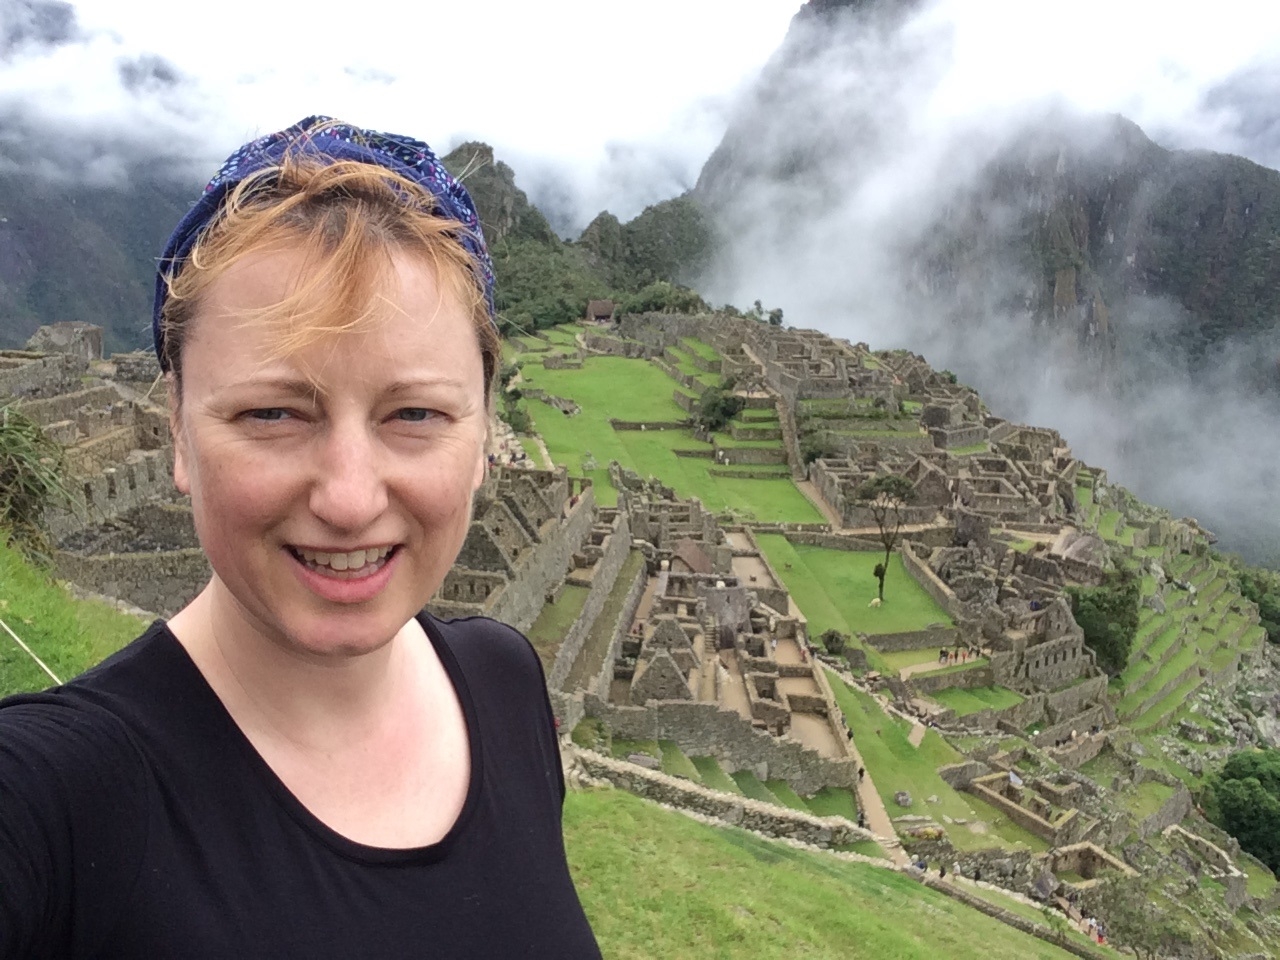 trekking the Inca Trail to Machu Picchu